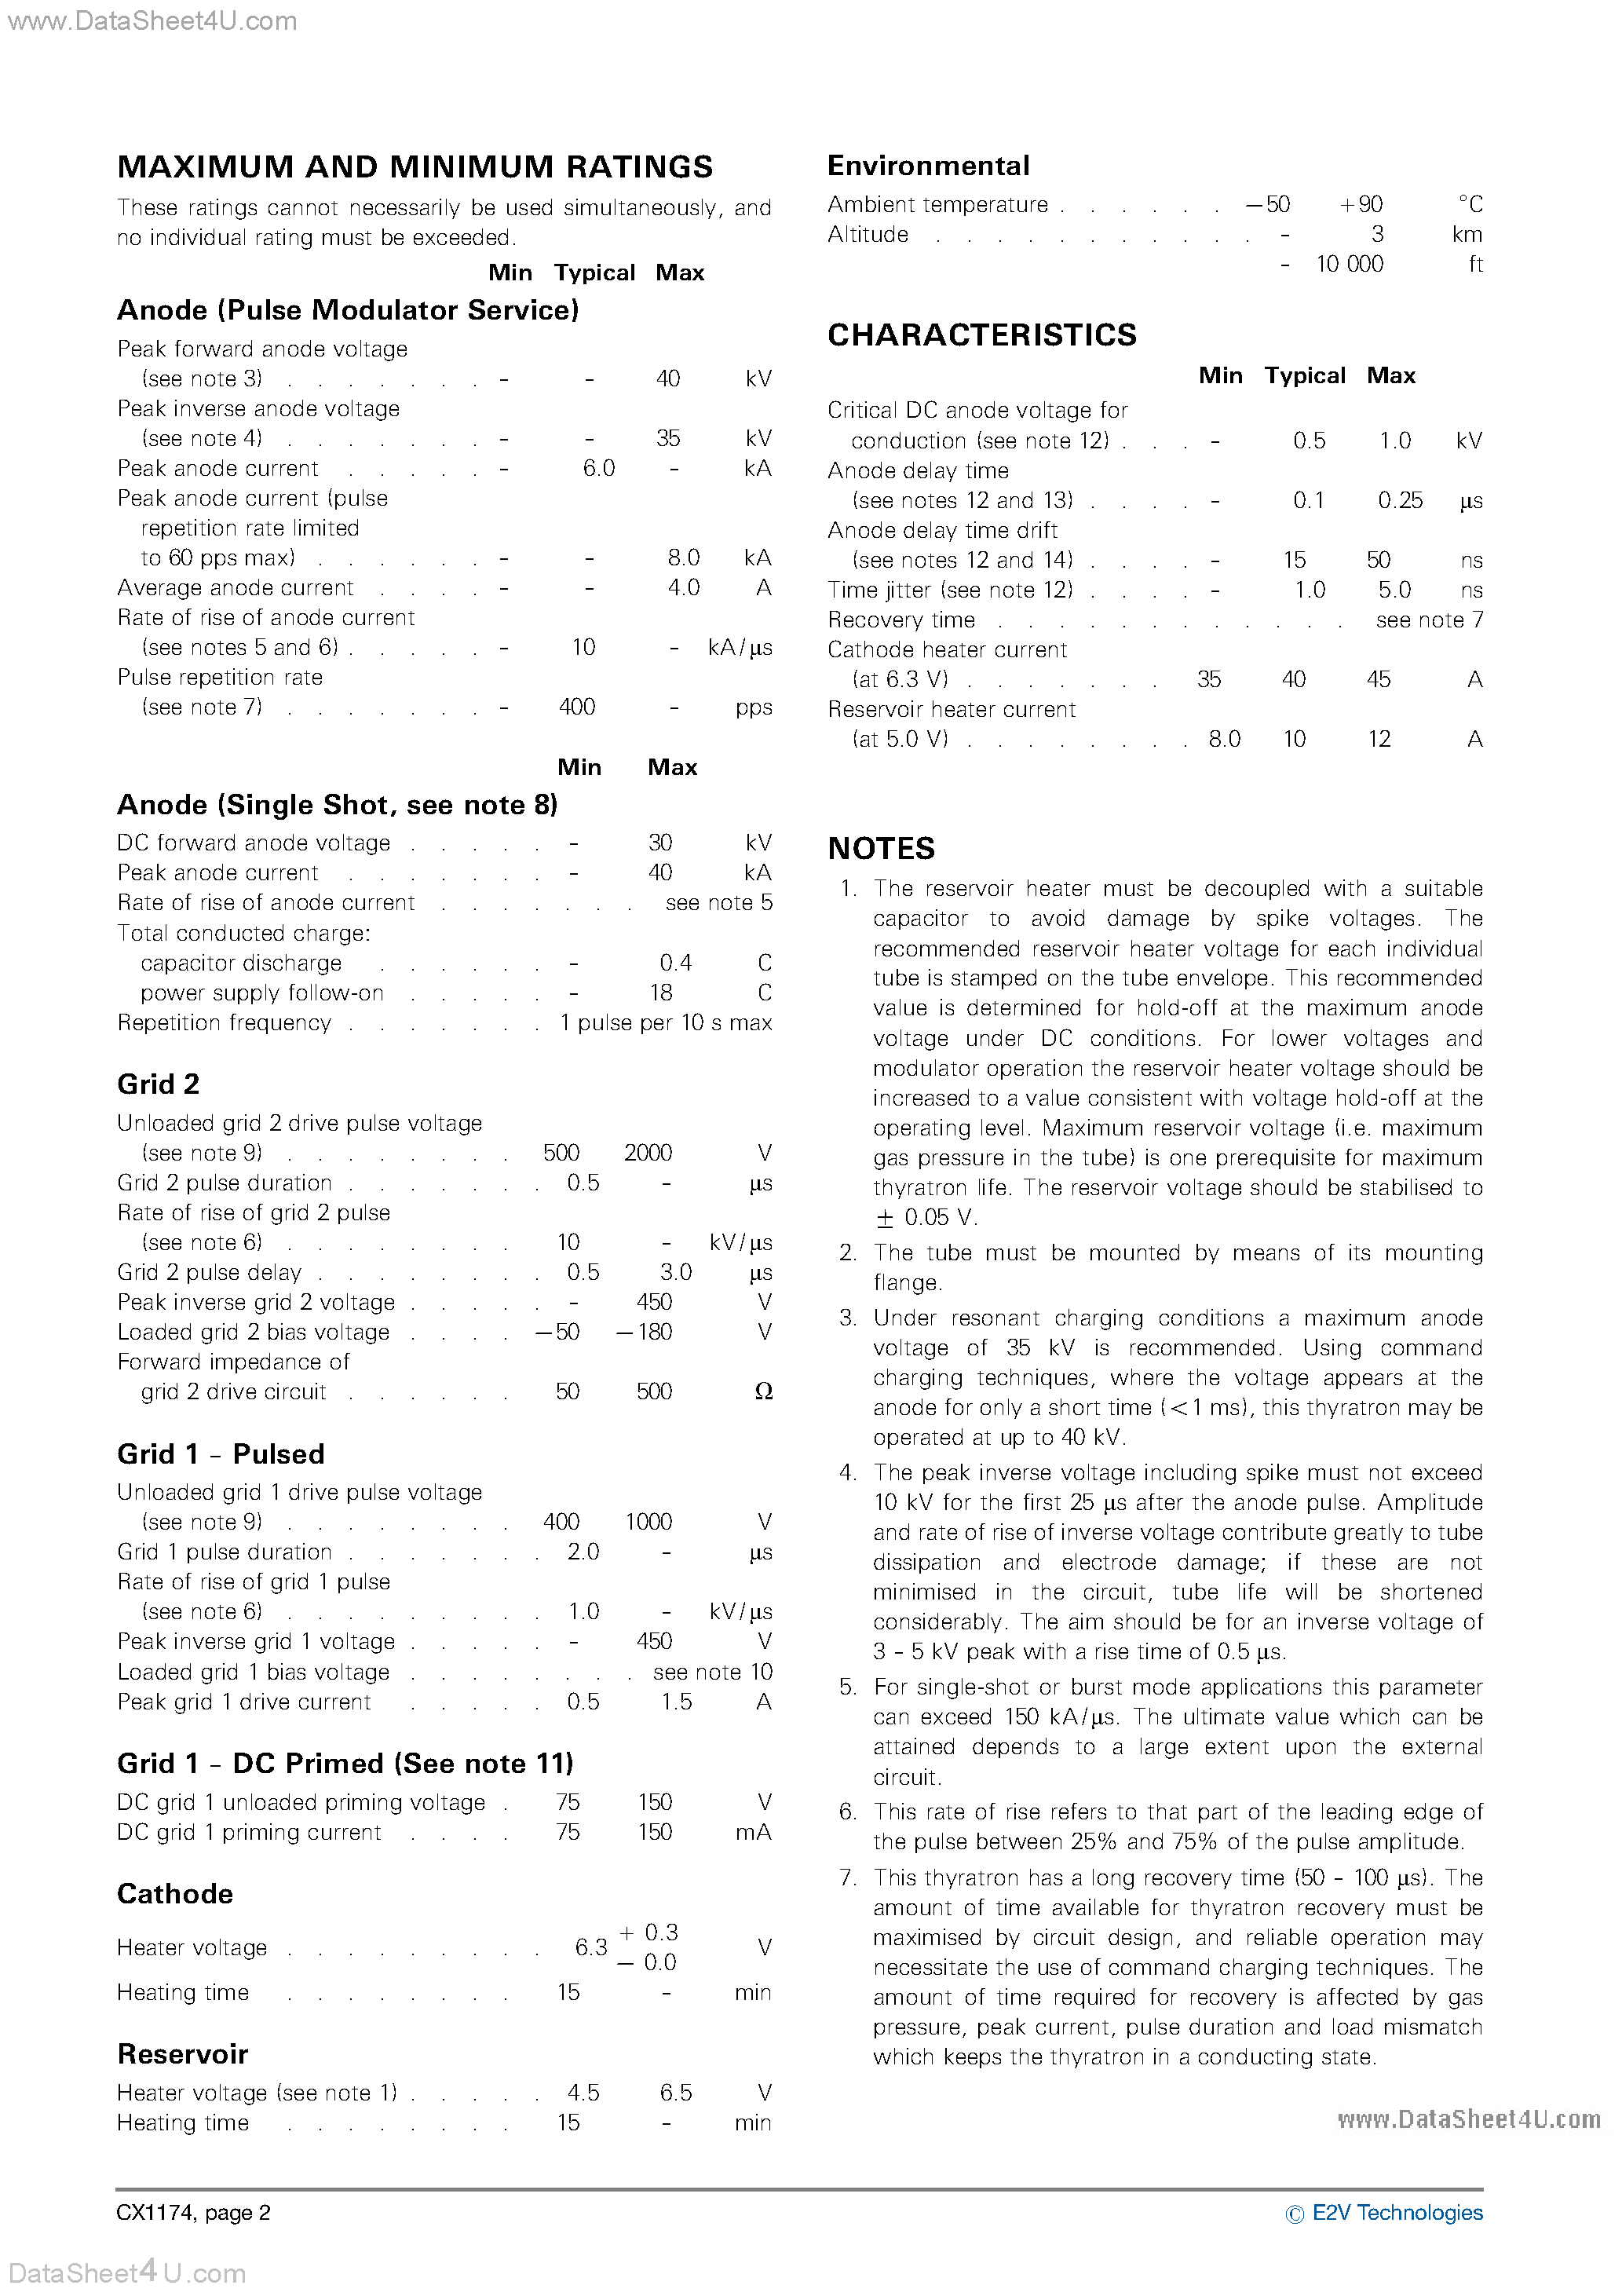 Datasheet CX1174 - Deuterium-Filled Ceramic Thyratron page 2